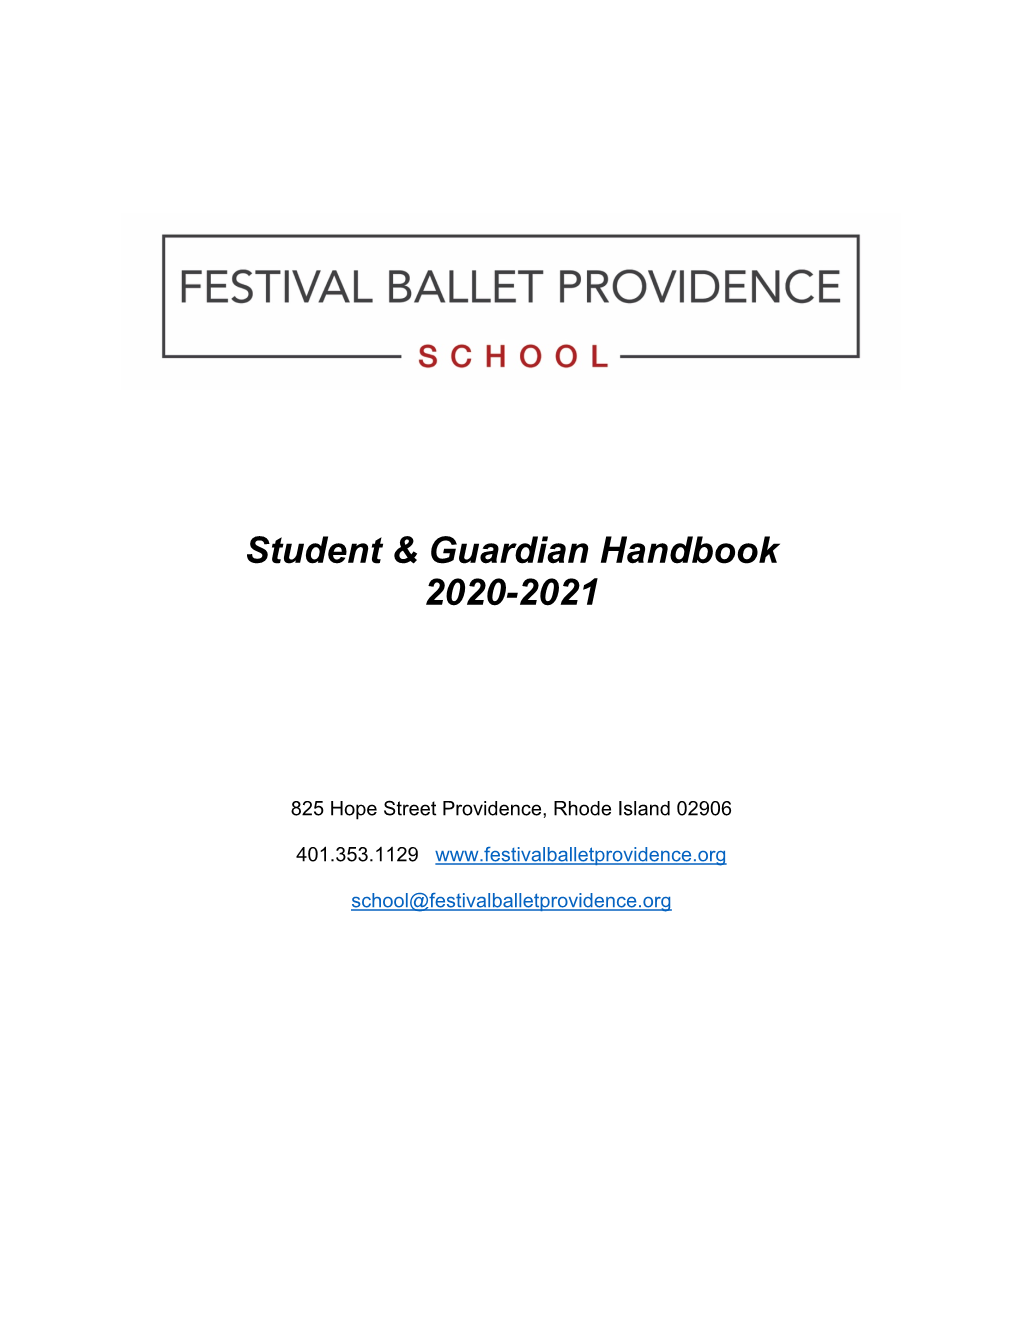 Student & Guardian Handbook 2020-2021